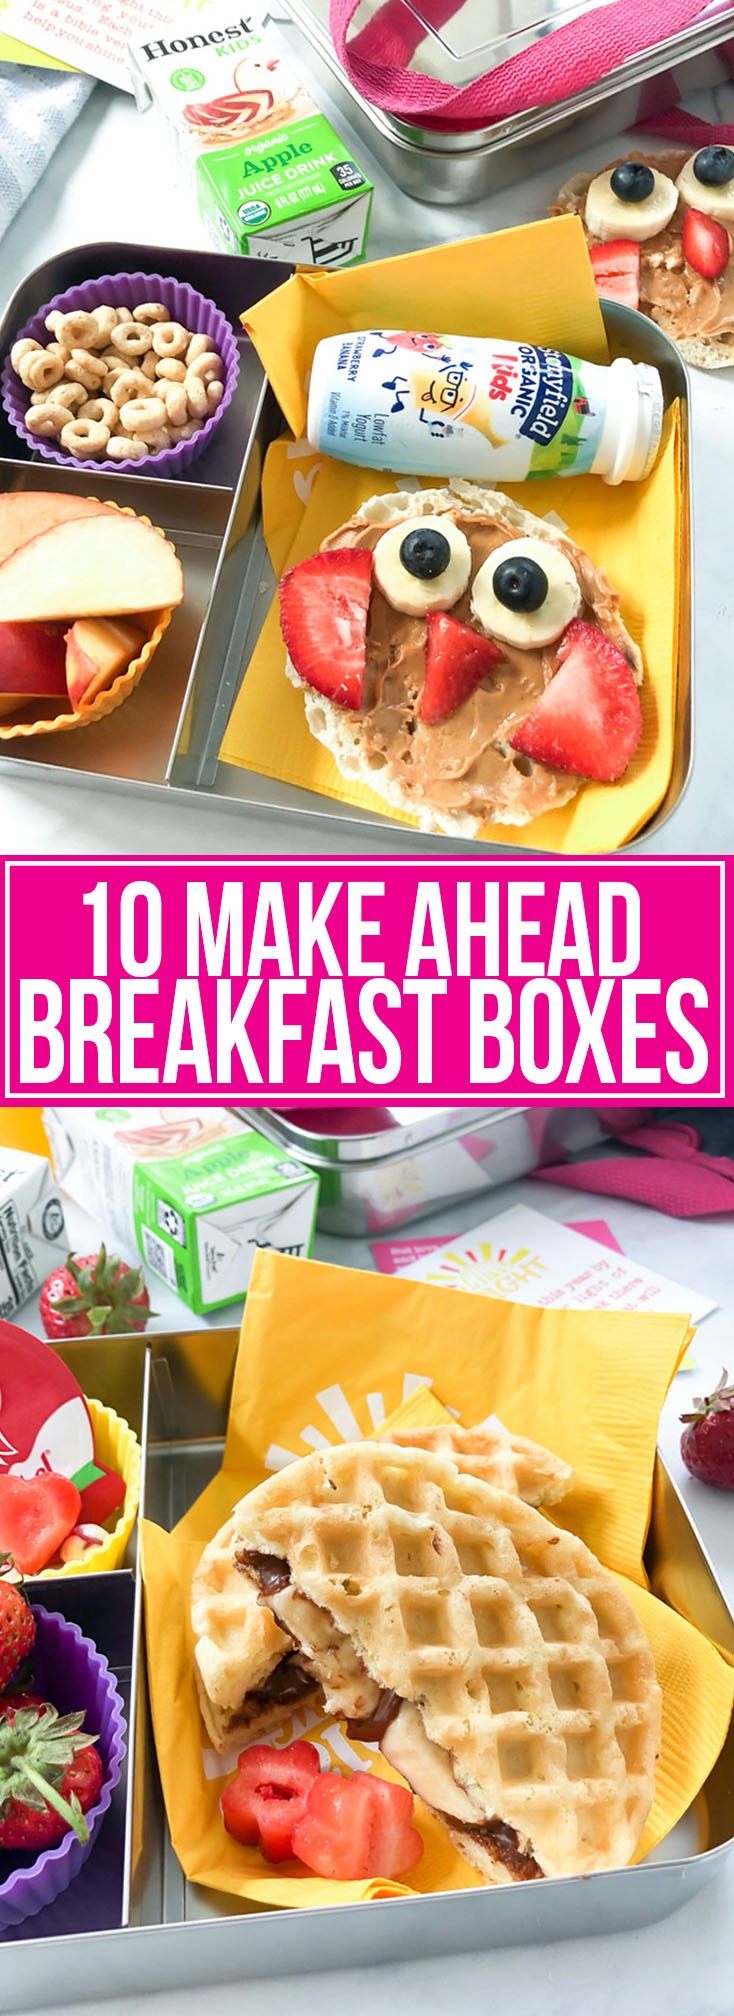 10 MAKE AHEAD BREAKFAST BOXES